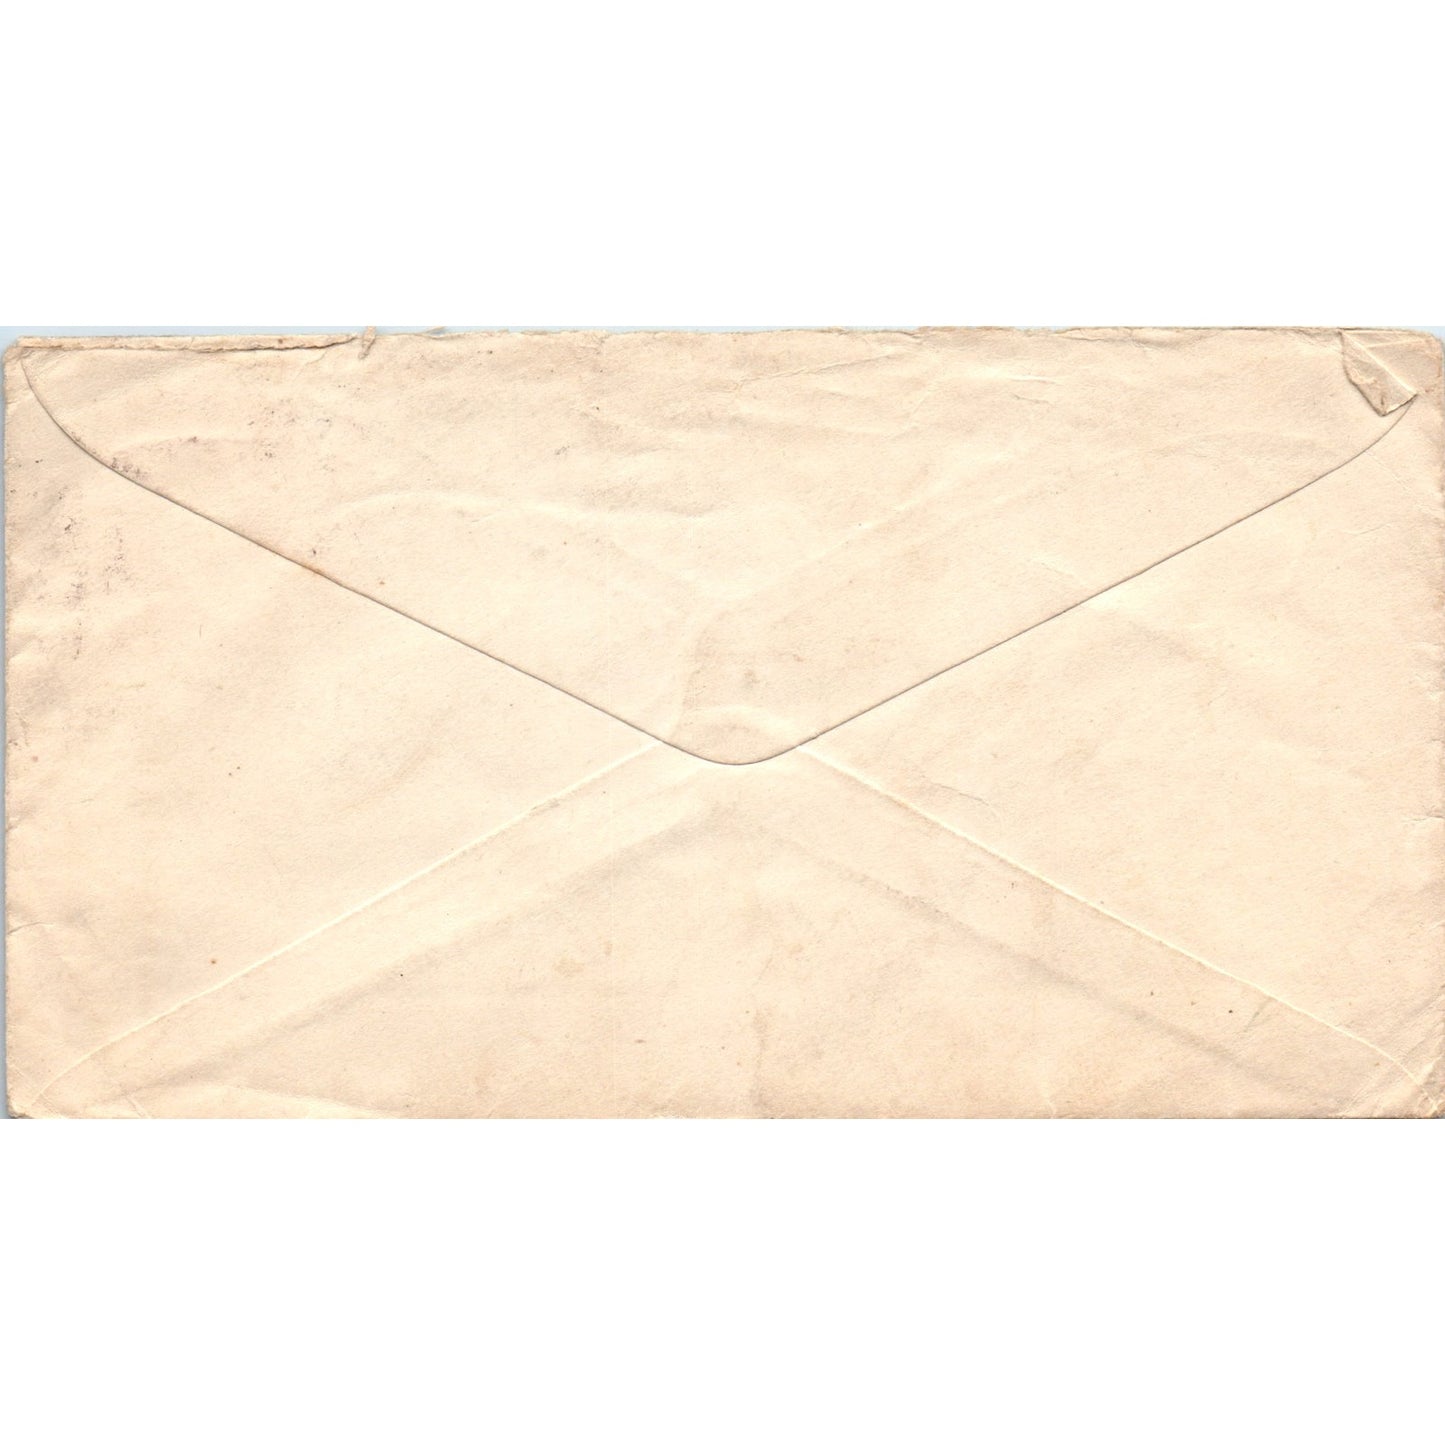 1914 West Stockbridge Marble Works Jane J. Rambo Postal Cover Envelope TG7-PC2